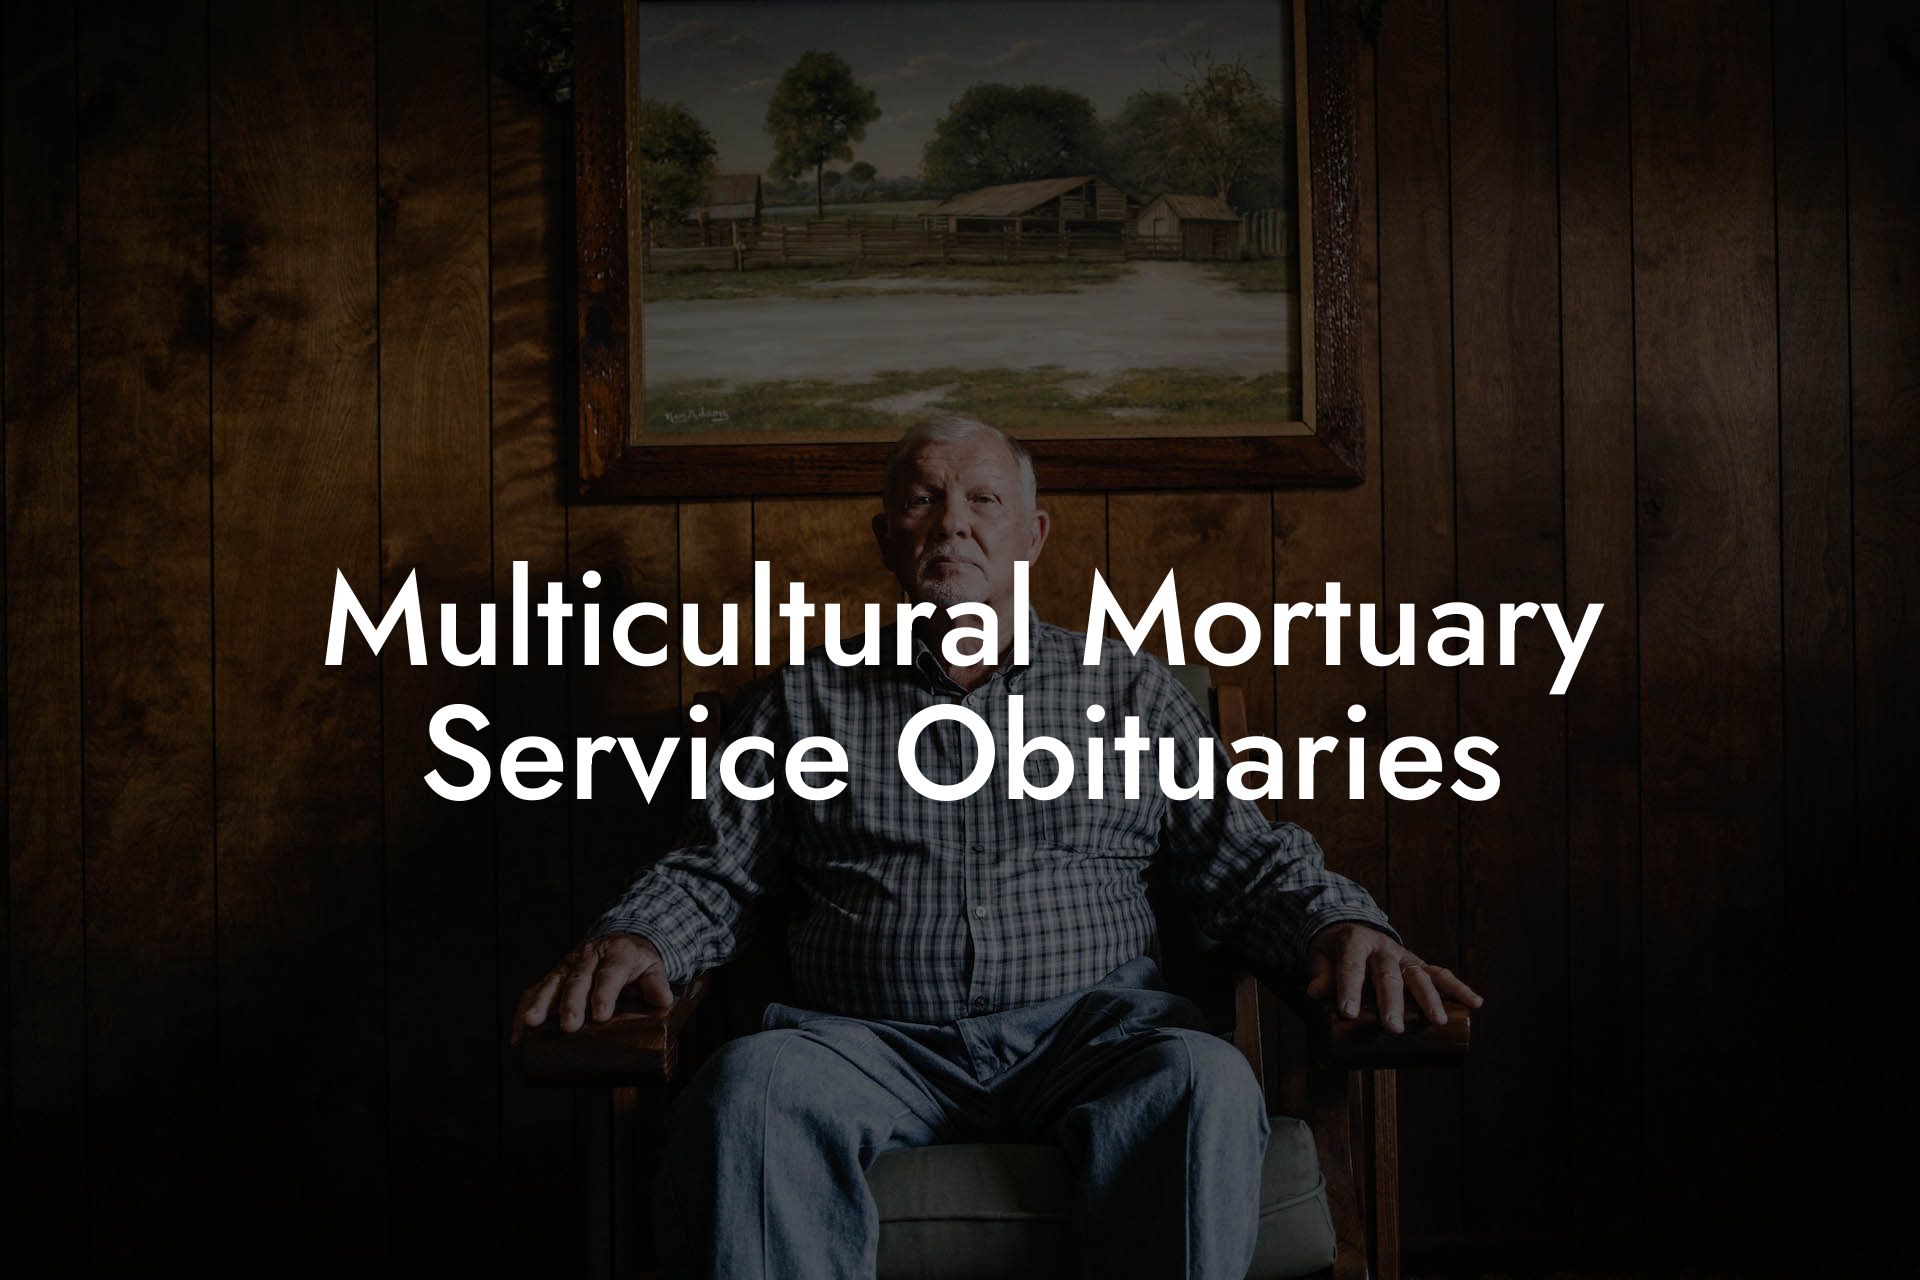 Multicultural Mortuary Service Obituaries